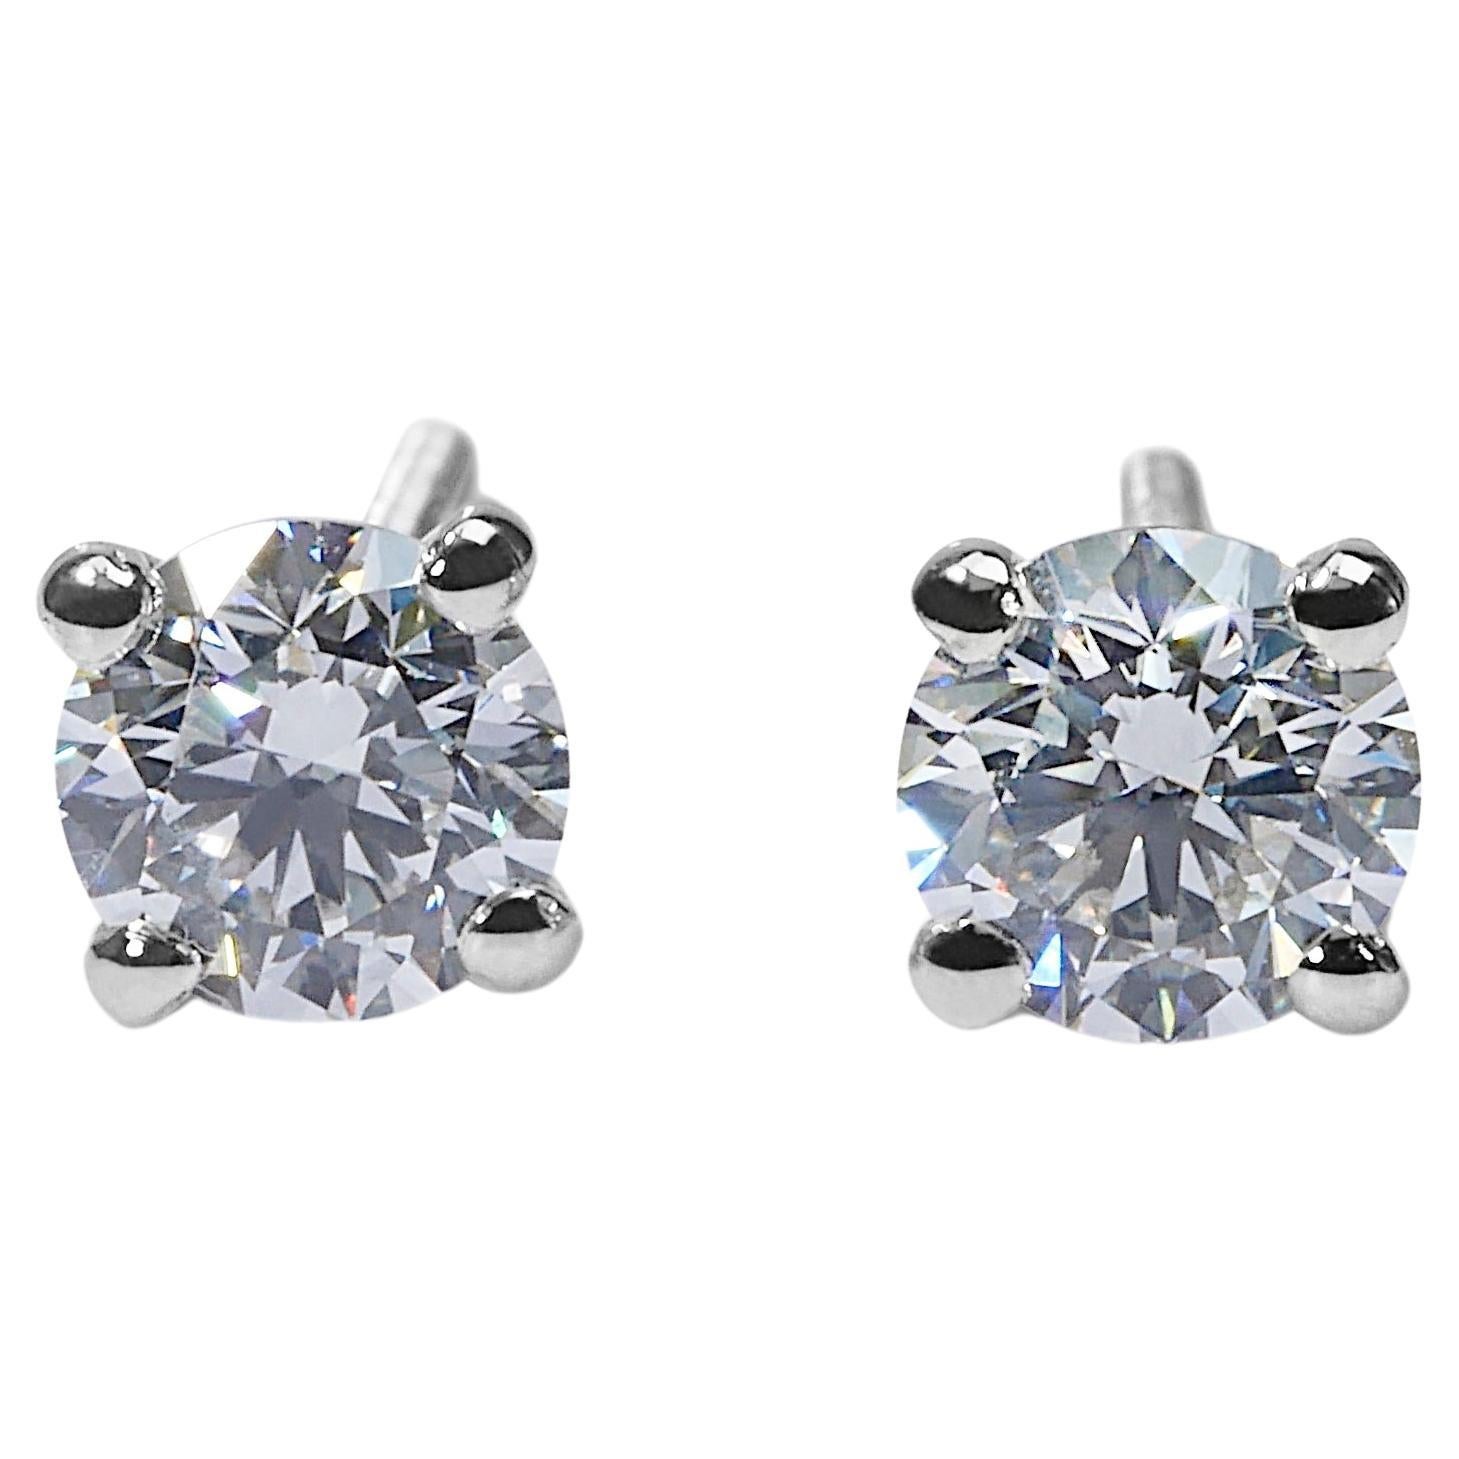 Mesmerizing 2.01ct Diamond Stud Earrings in 18k White Gold - GIA Certified  For Sale